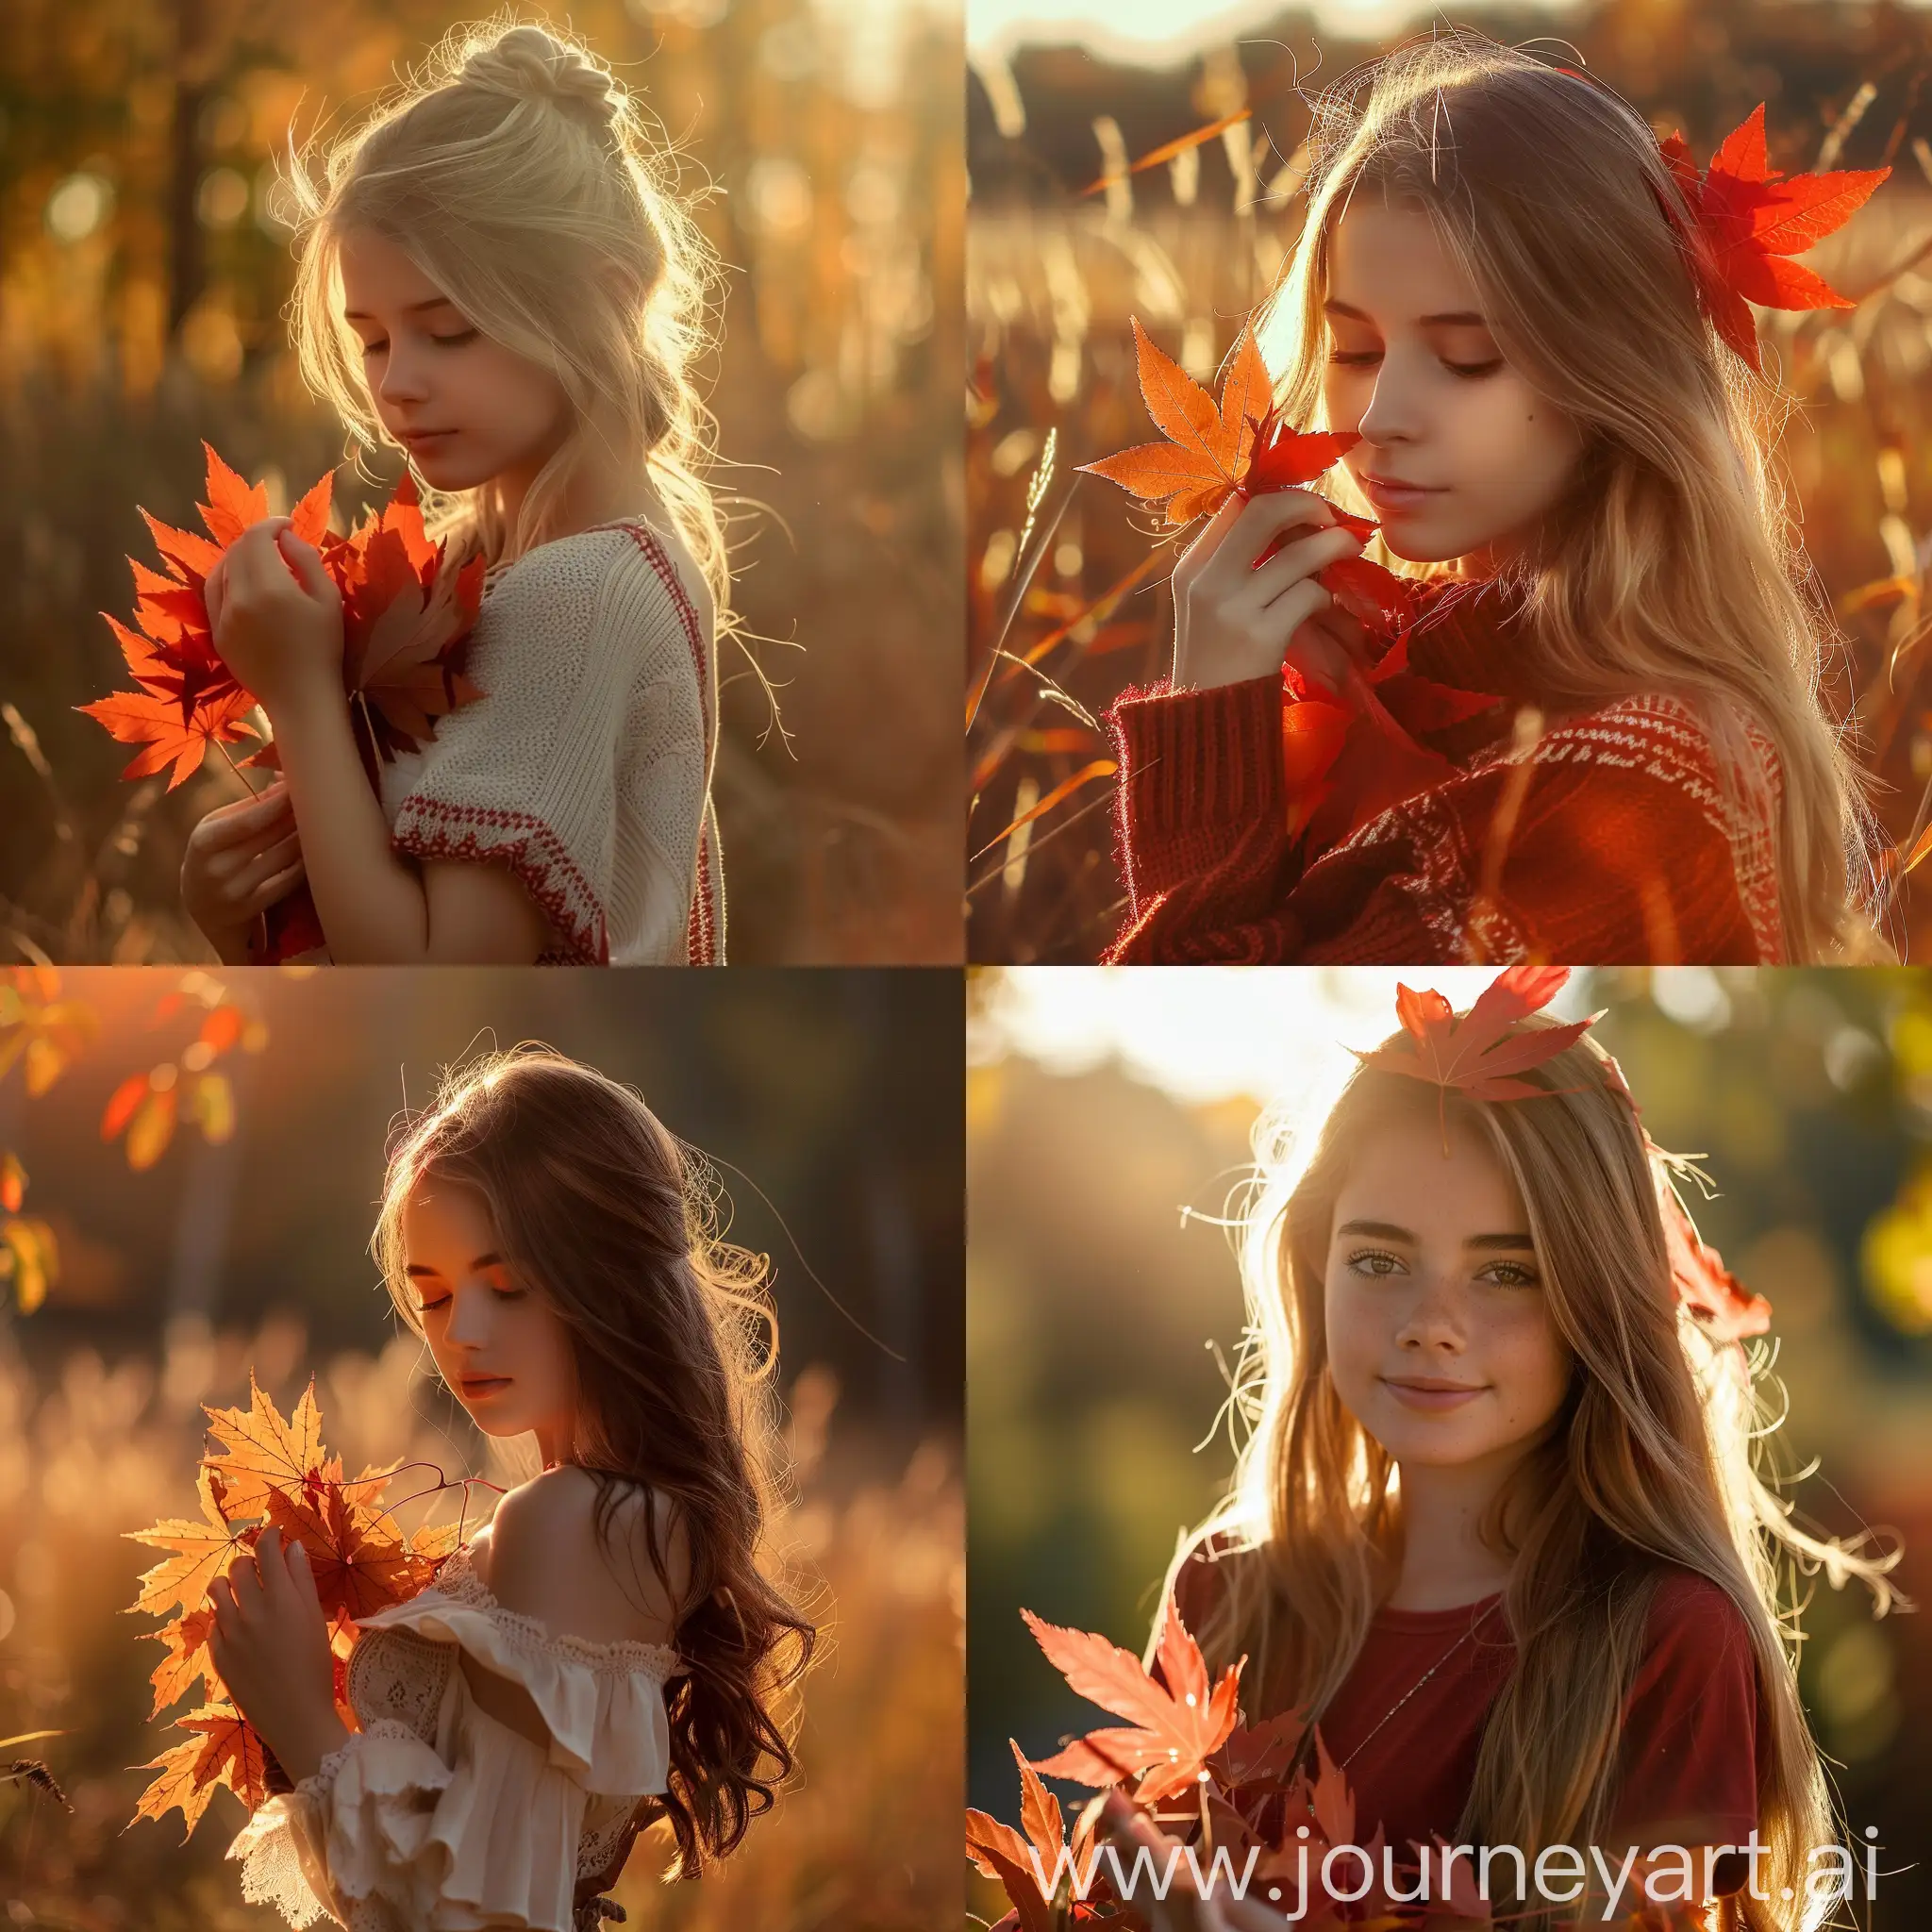 Beautiful-Girl-Holding-Maple-Leaves-in-Autumn-Sunlight